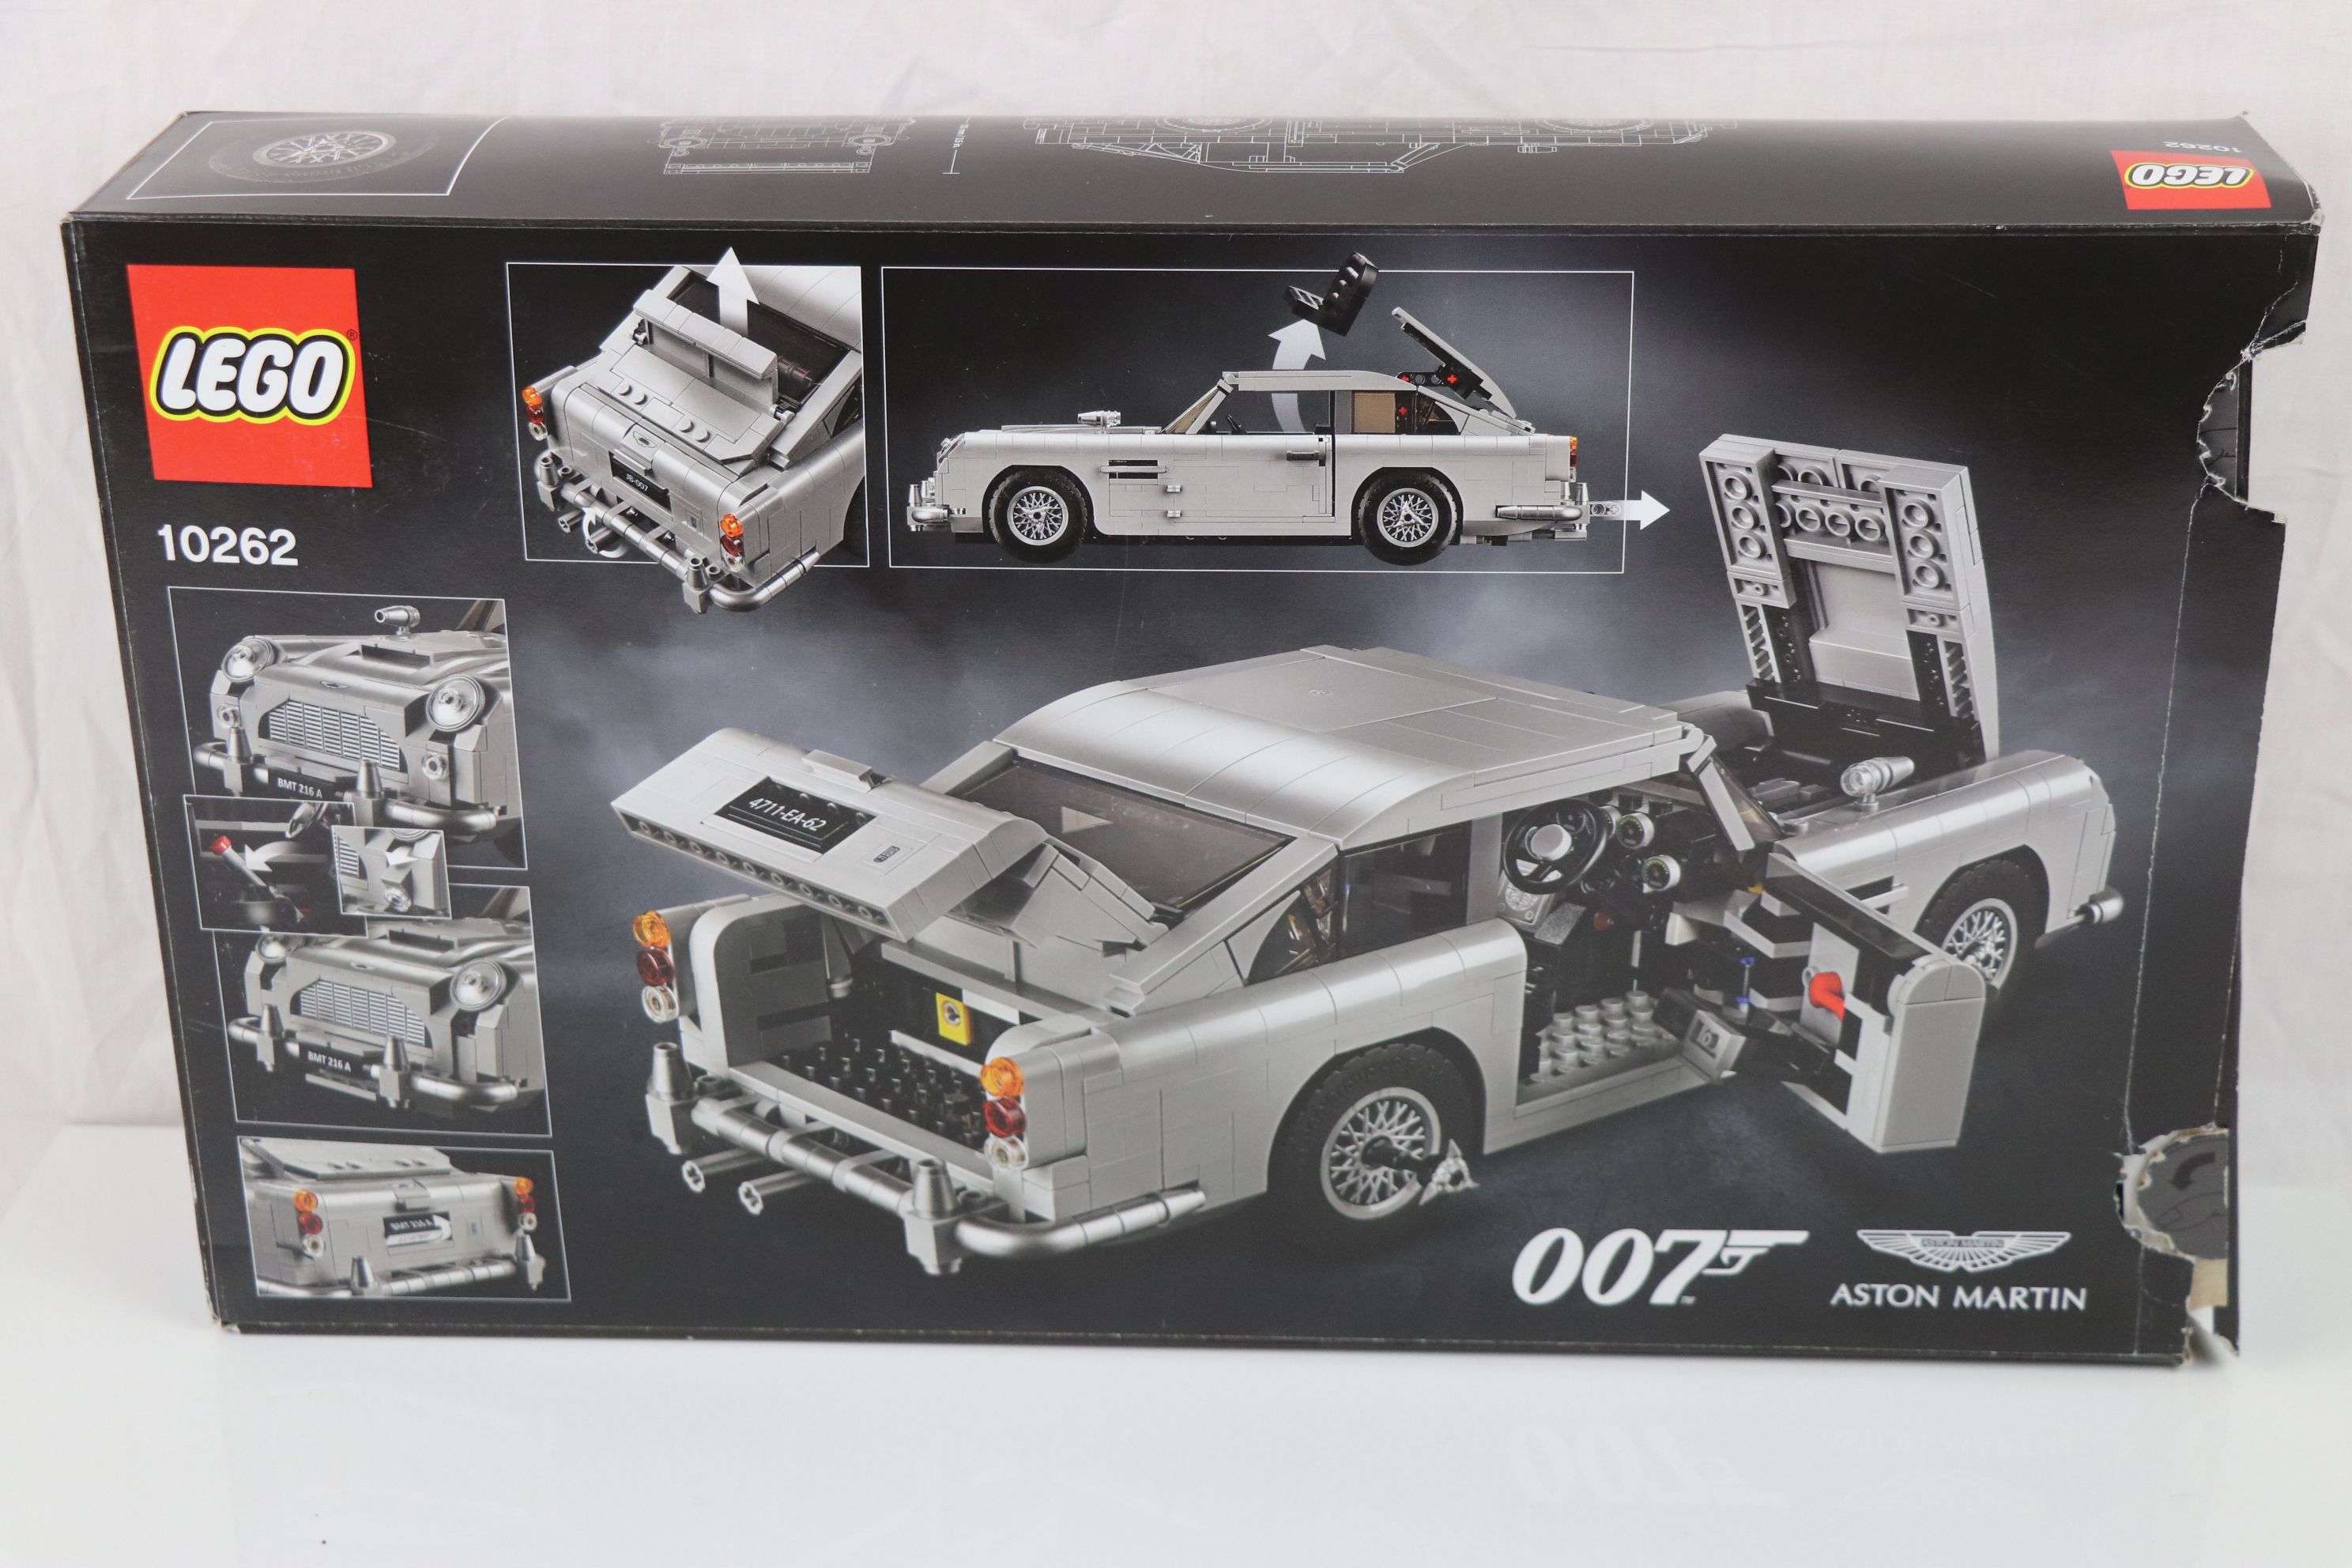 Lego - Boxed Lego Creator Expert 10262 James Bond 007 Aston Martin DB5 set, previously built, bricks - Image 11 of 11